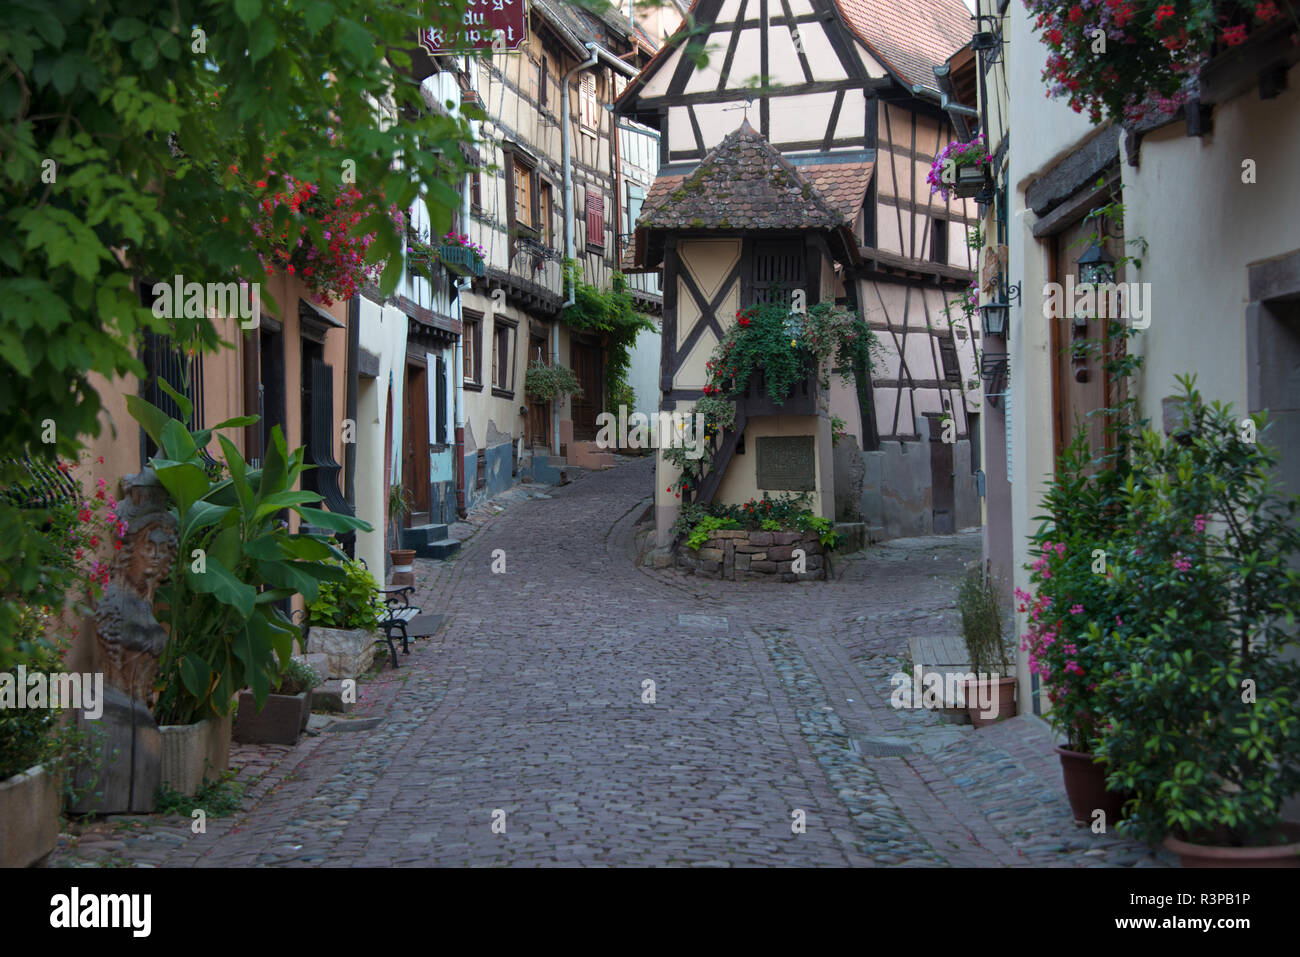 France, Alsace, Eguisheim. A cobblestone street winds between traditional architecture in Eguisheim. Stock Photo